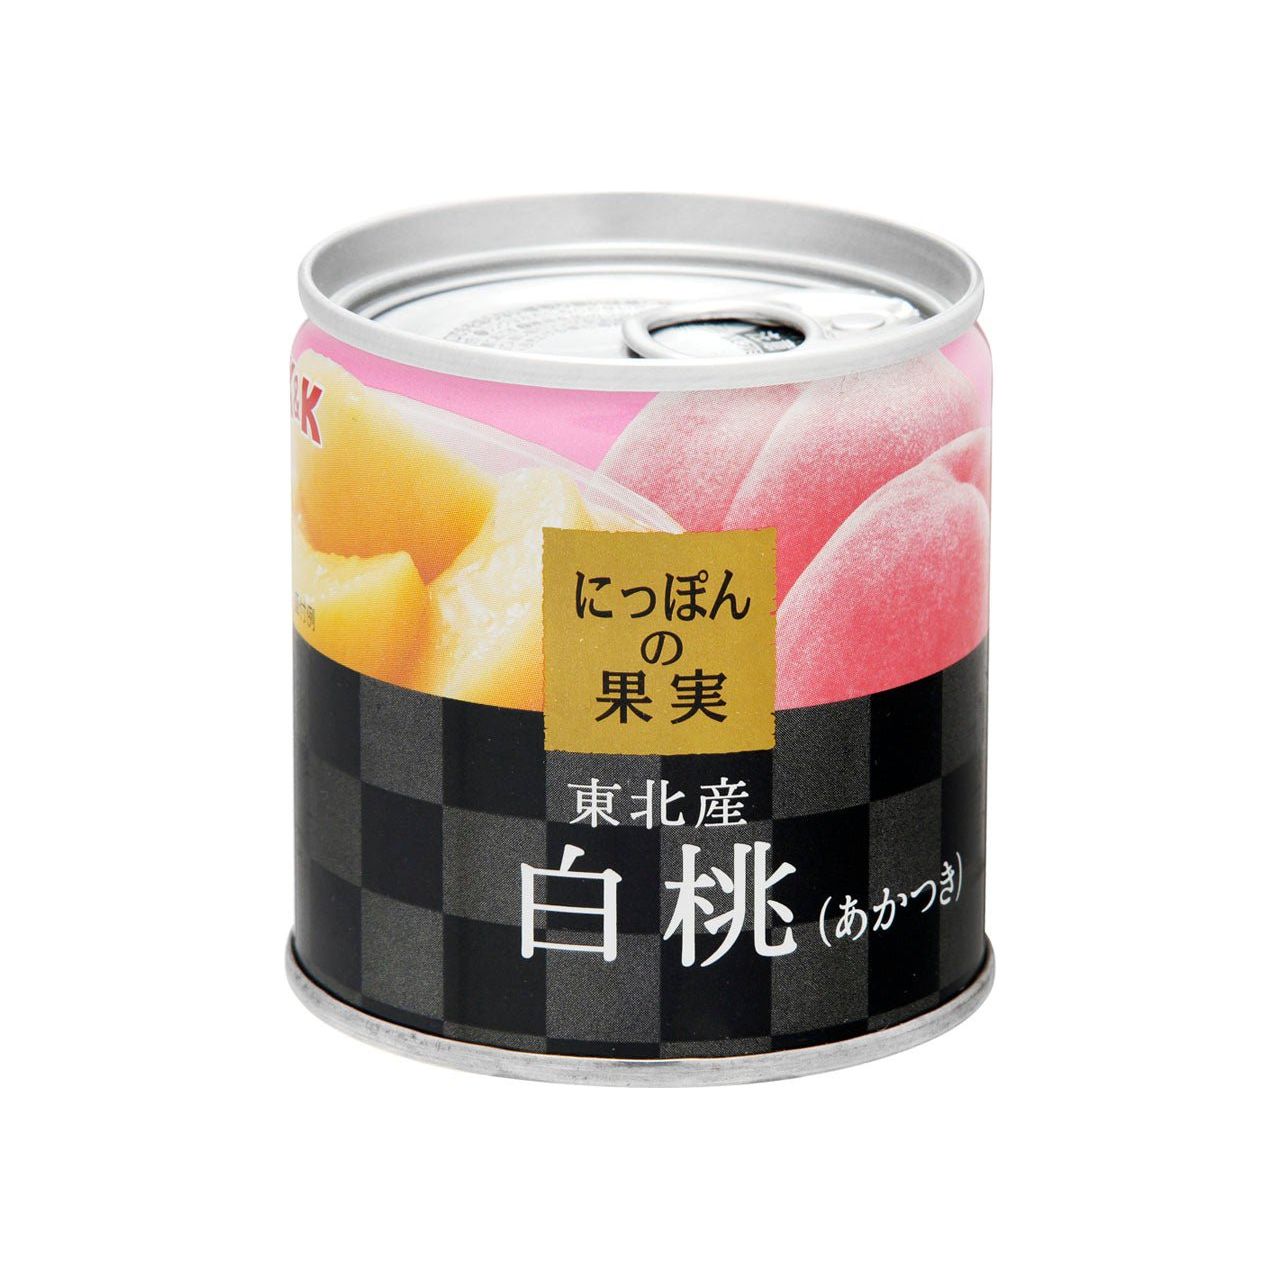 K & K Nippon Fruit Tohoku White Peach (Akatsuki)